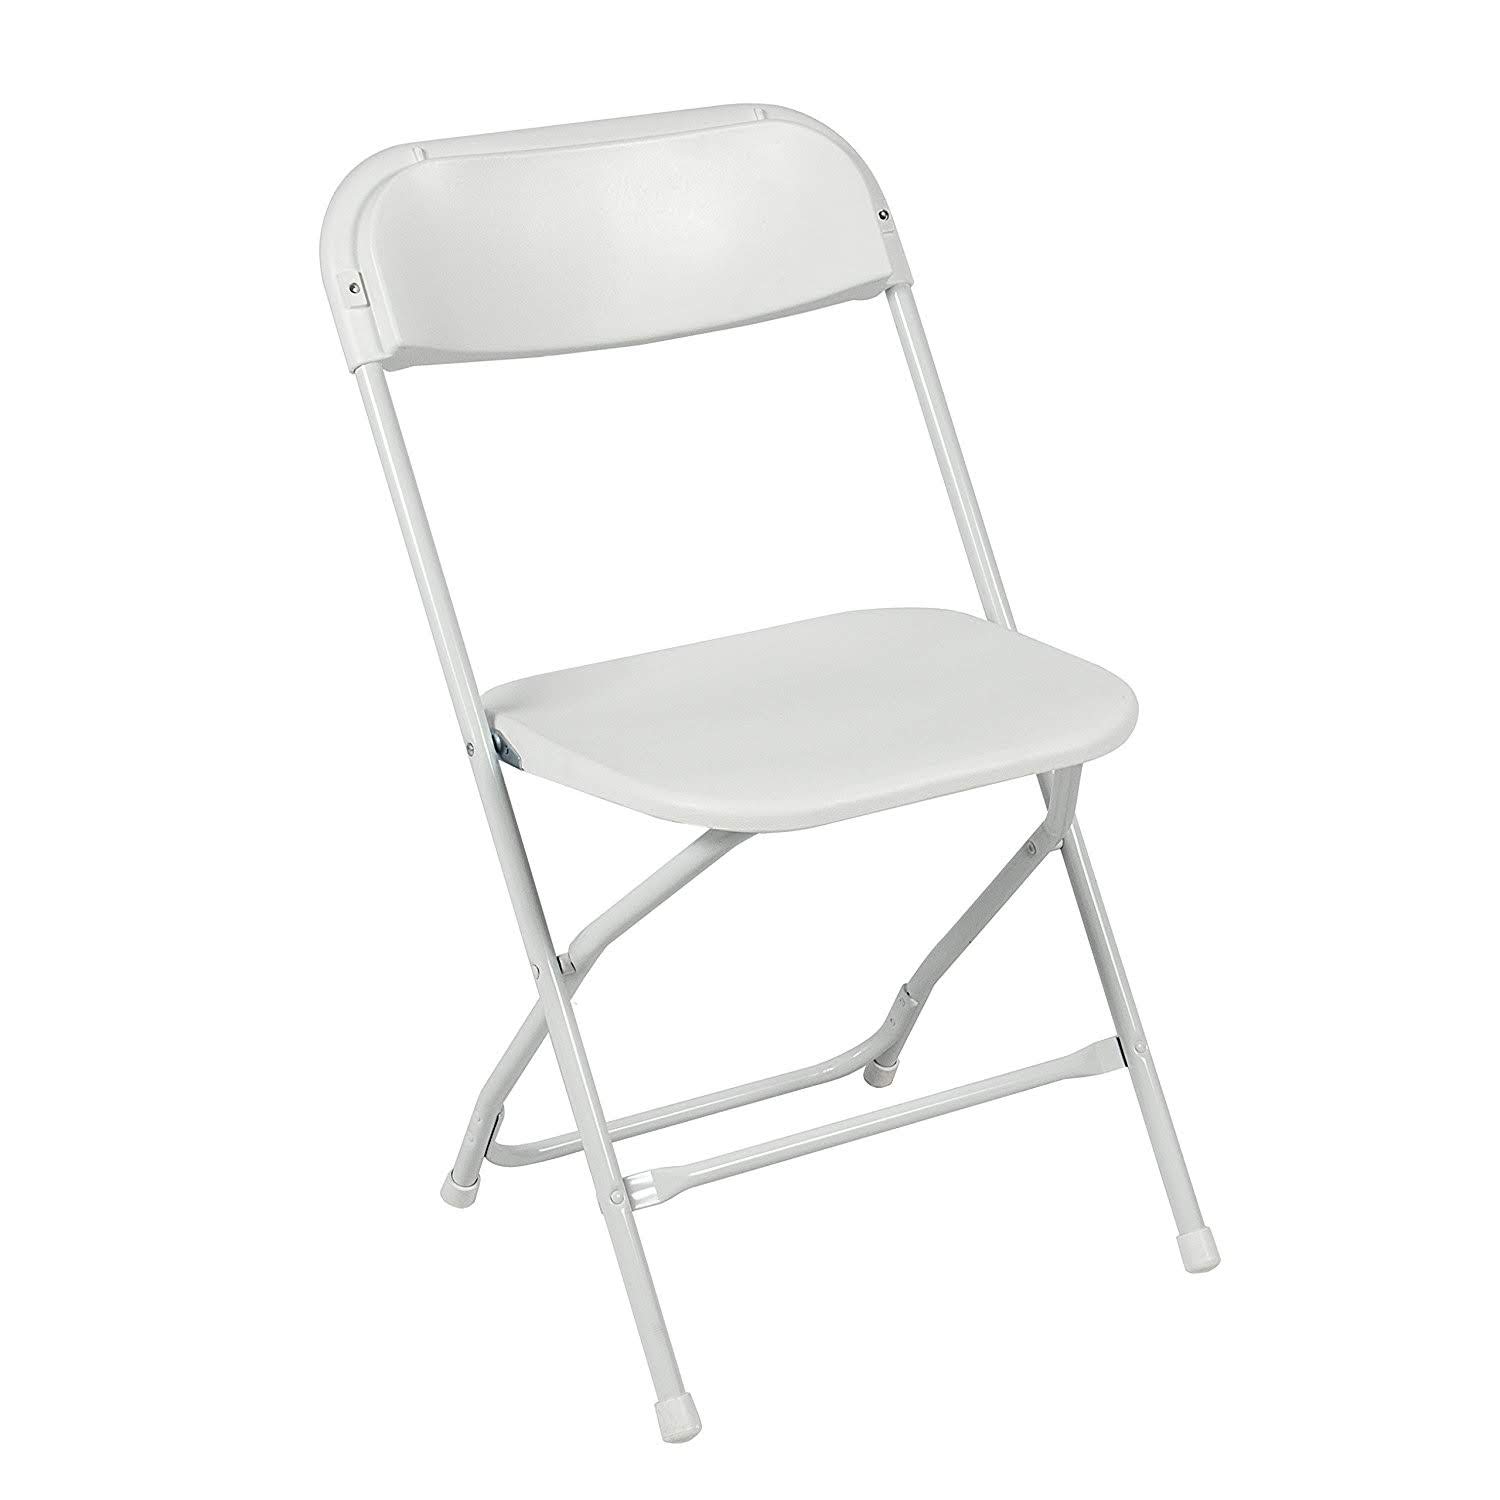 LV Taco - folding chair rental